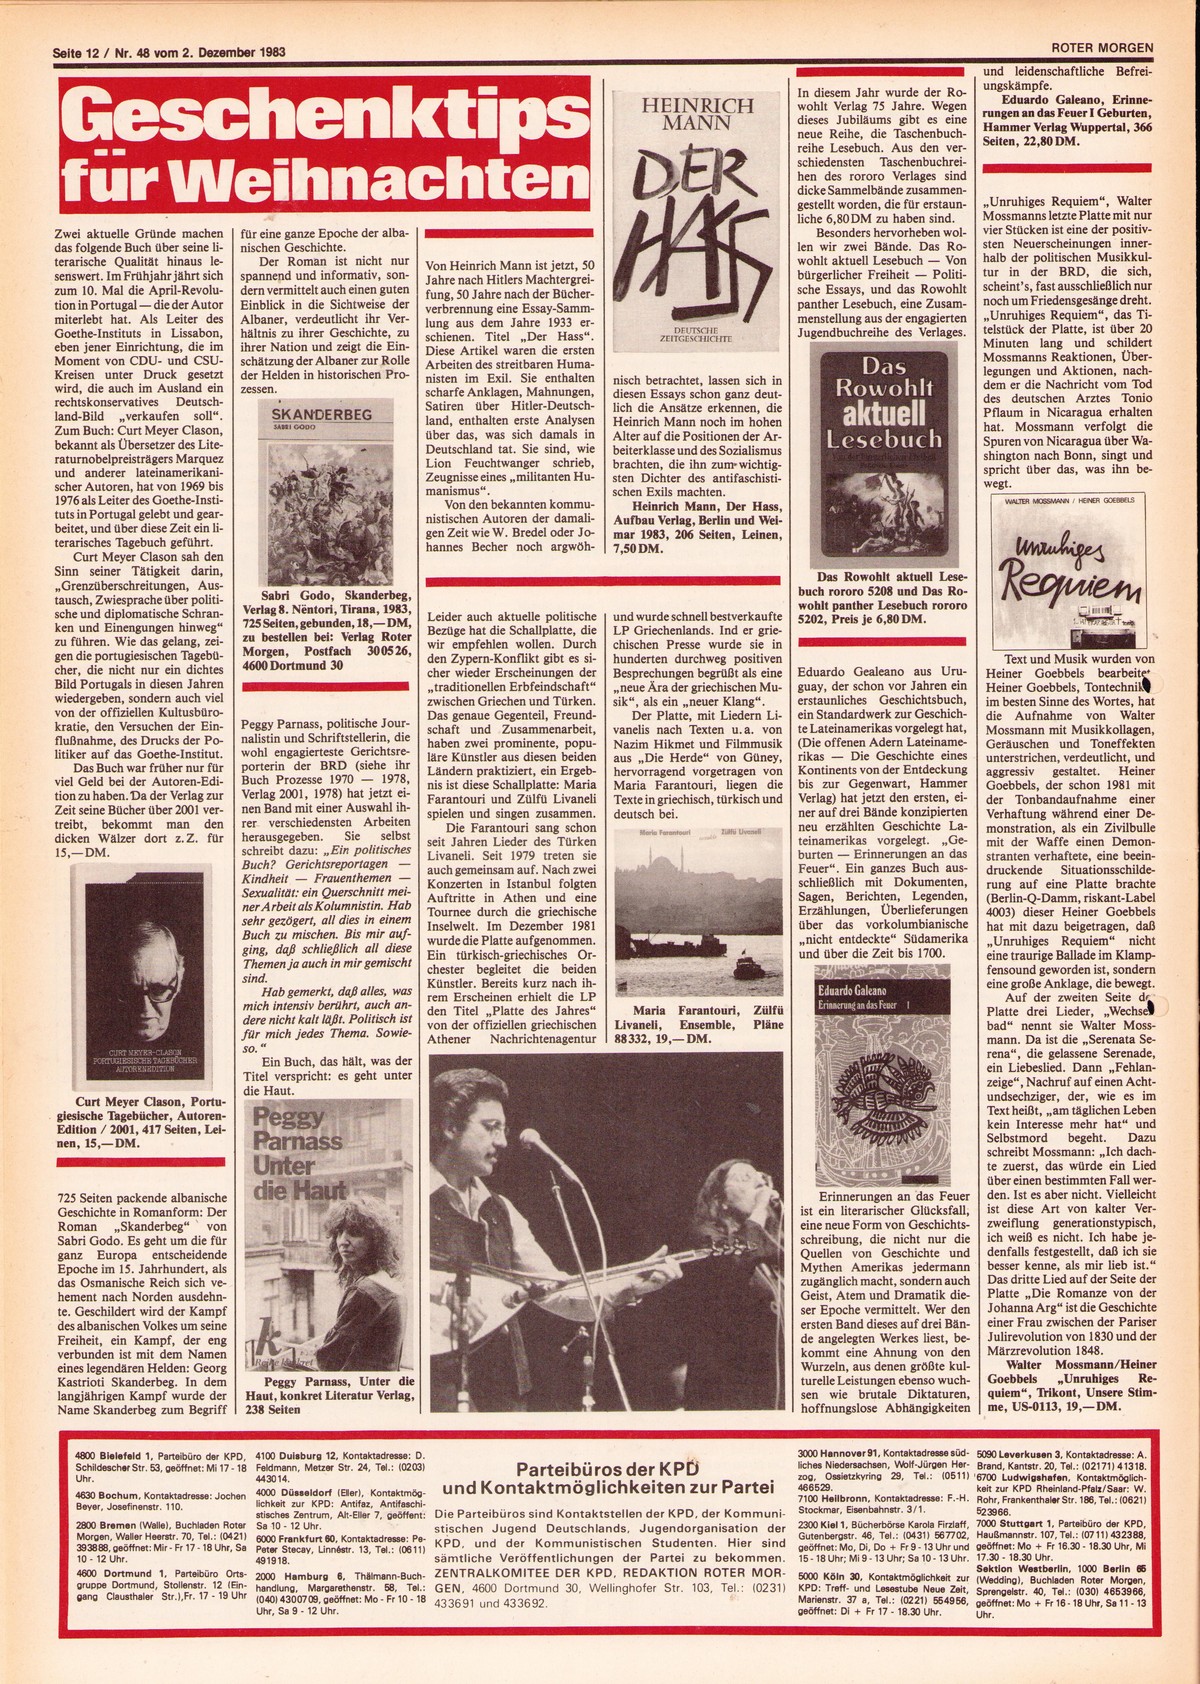 Roter Morgen, 17. Jg., 2. Dezember 1983, Nr. 48, Seite 12